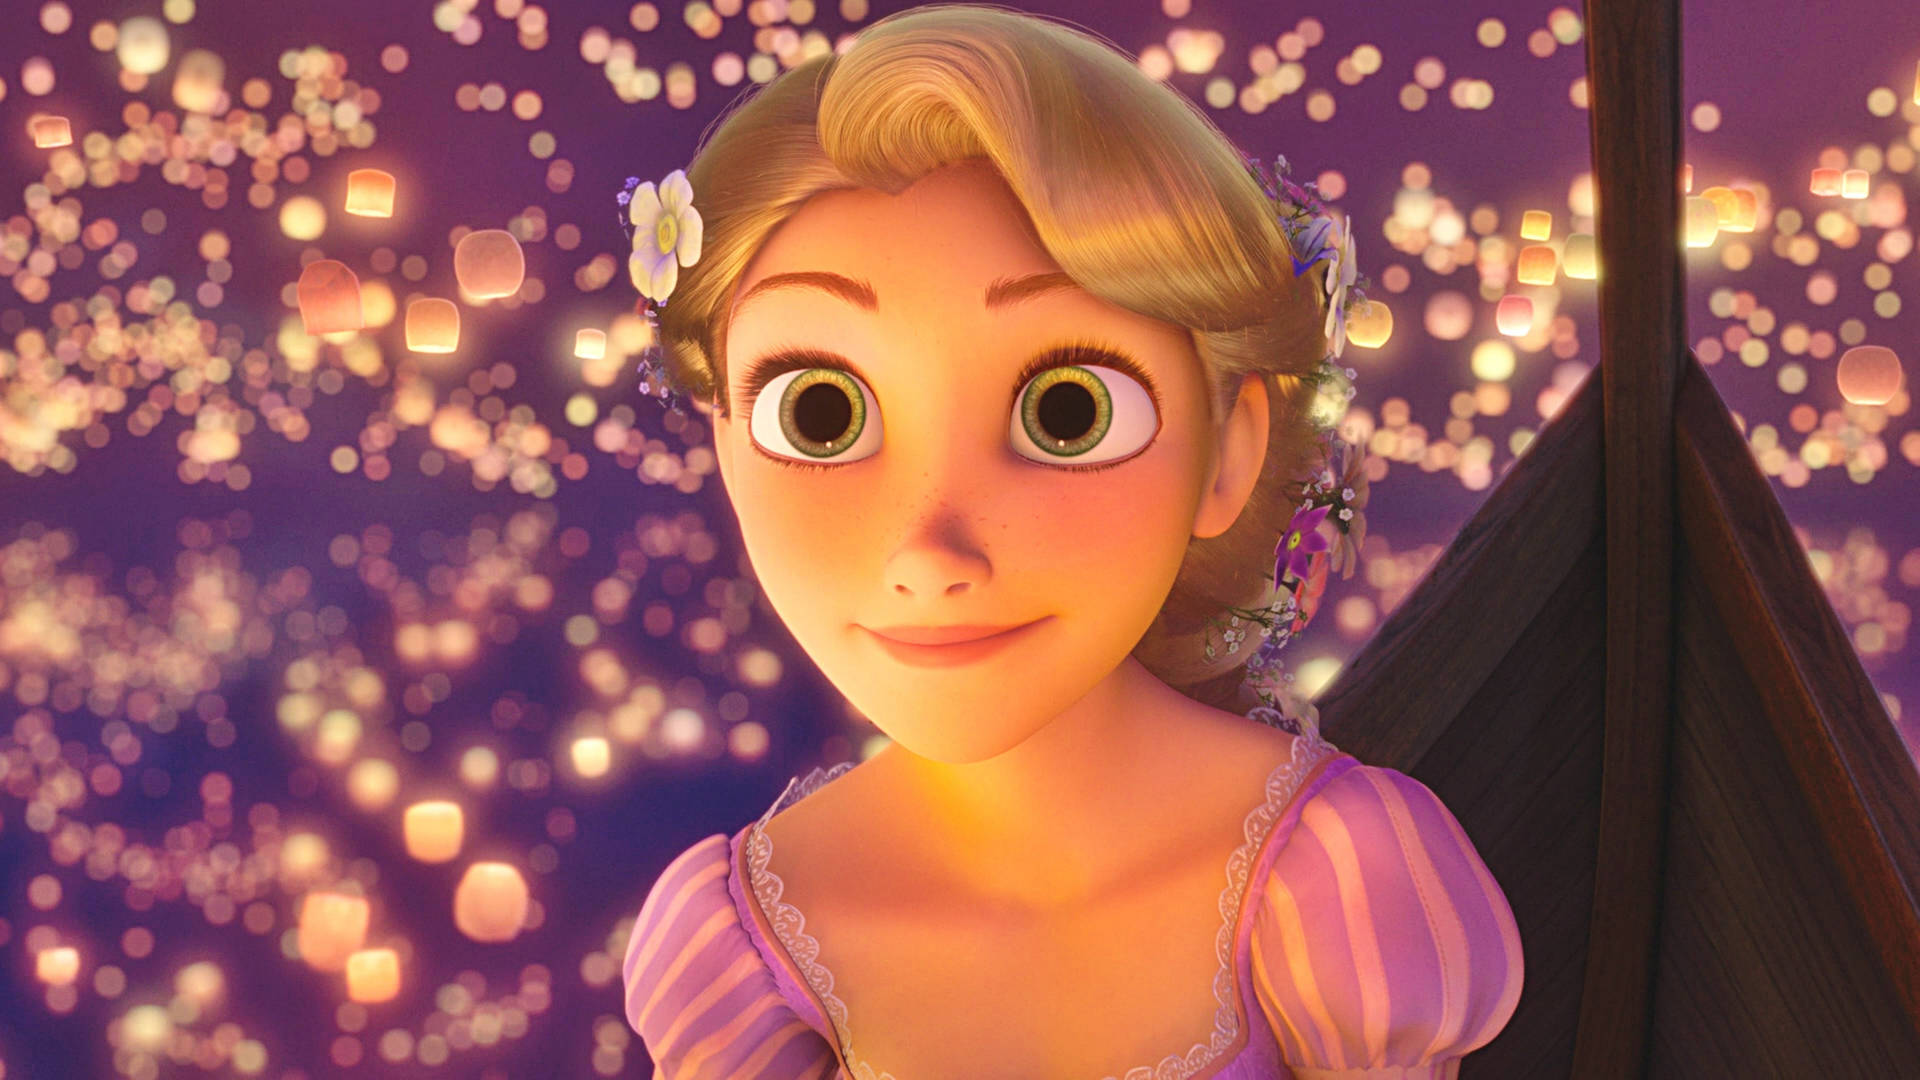 Disney Princess Rapunzel With Lanterns Background